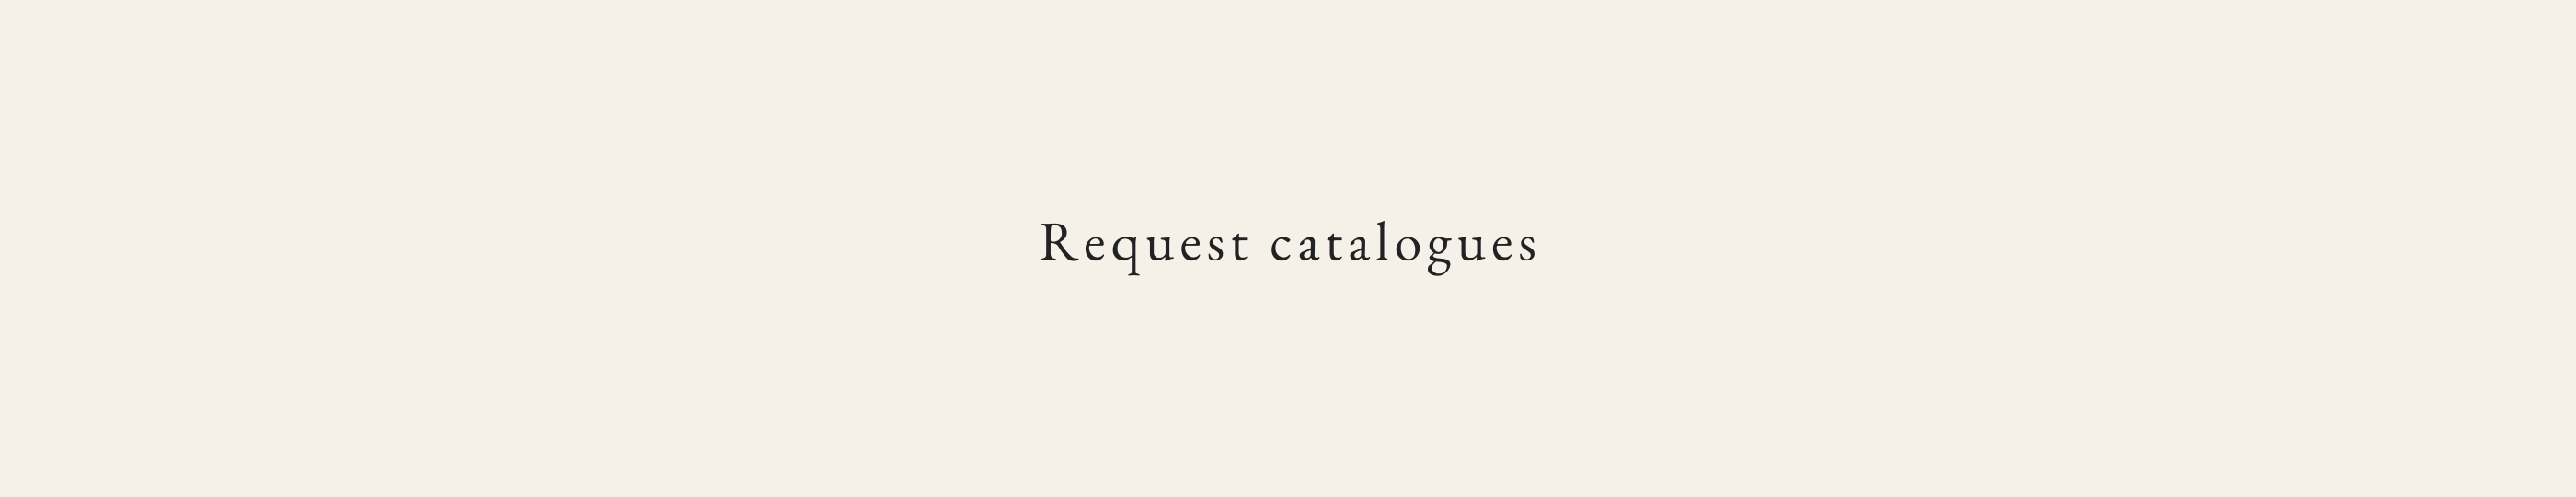 Request catalogues